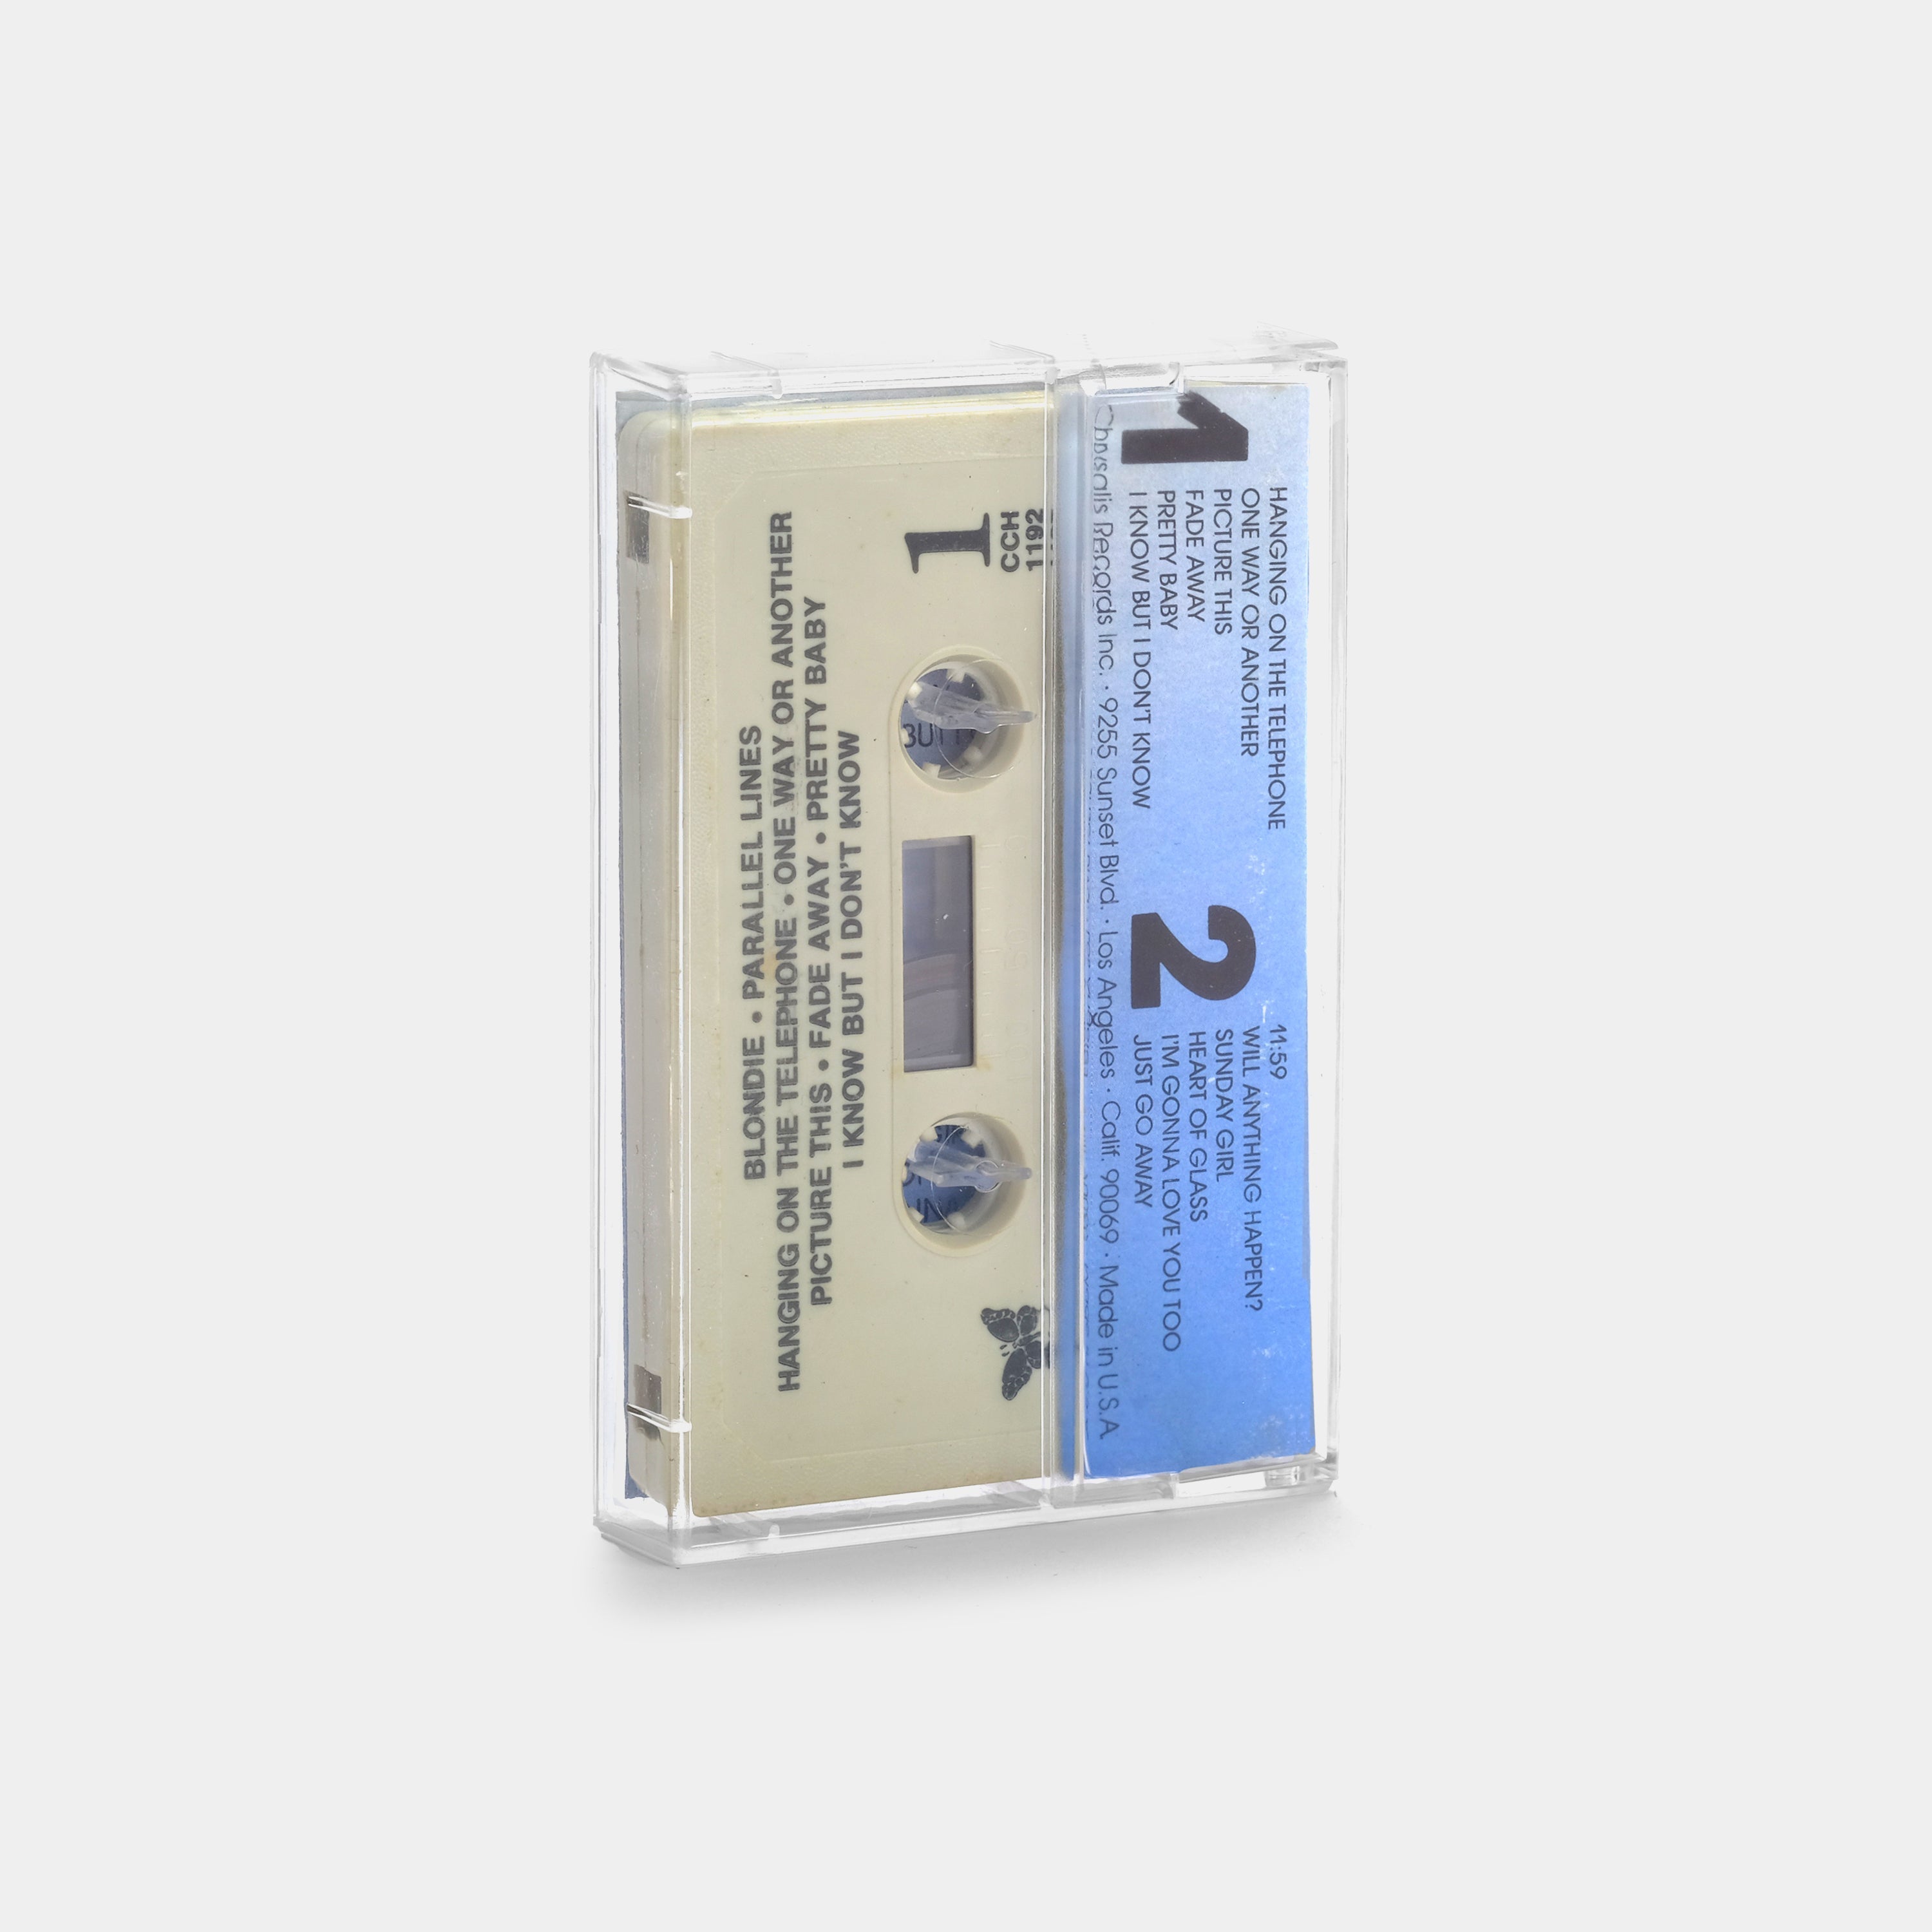 Blondie - Parallel Lines Cassette Tape